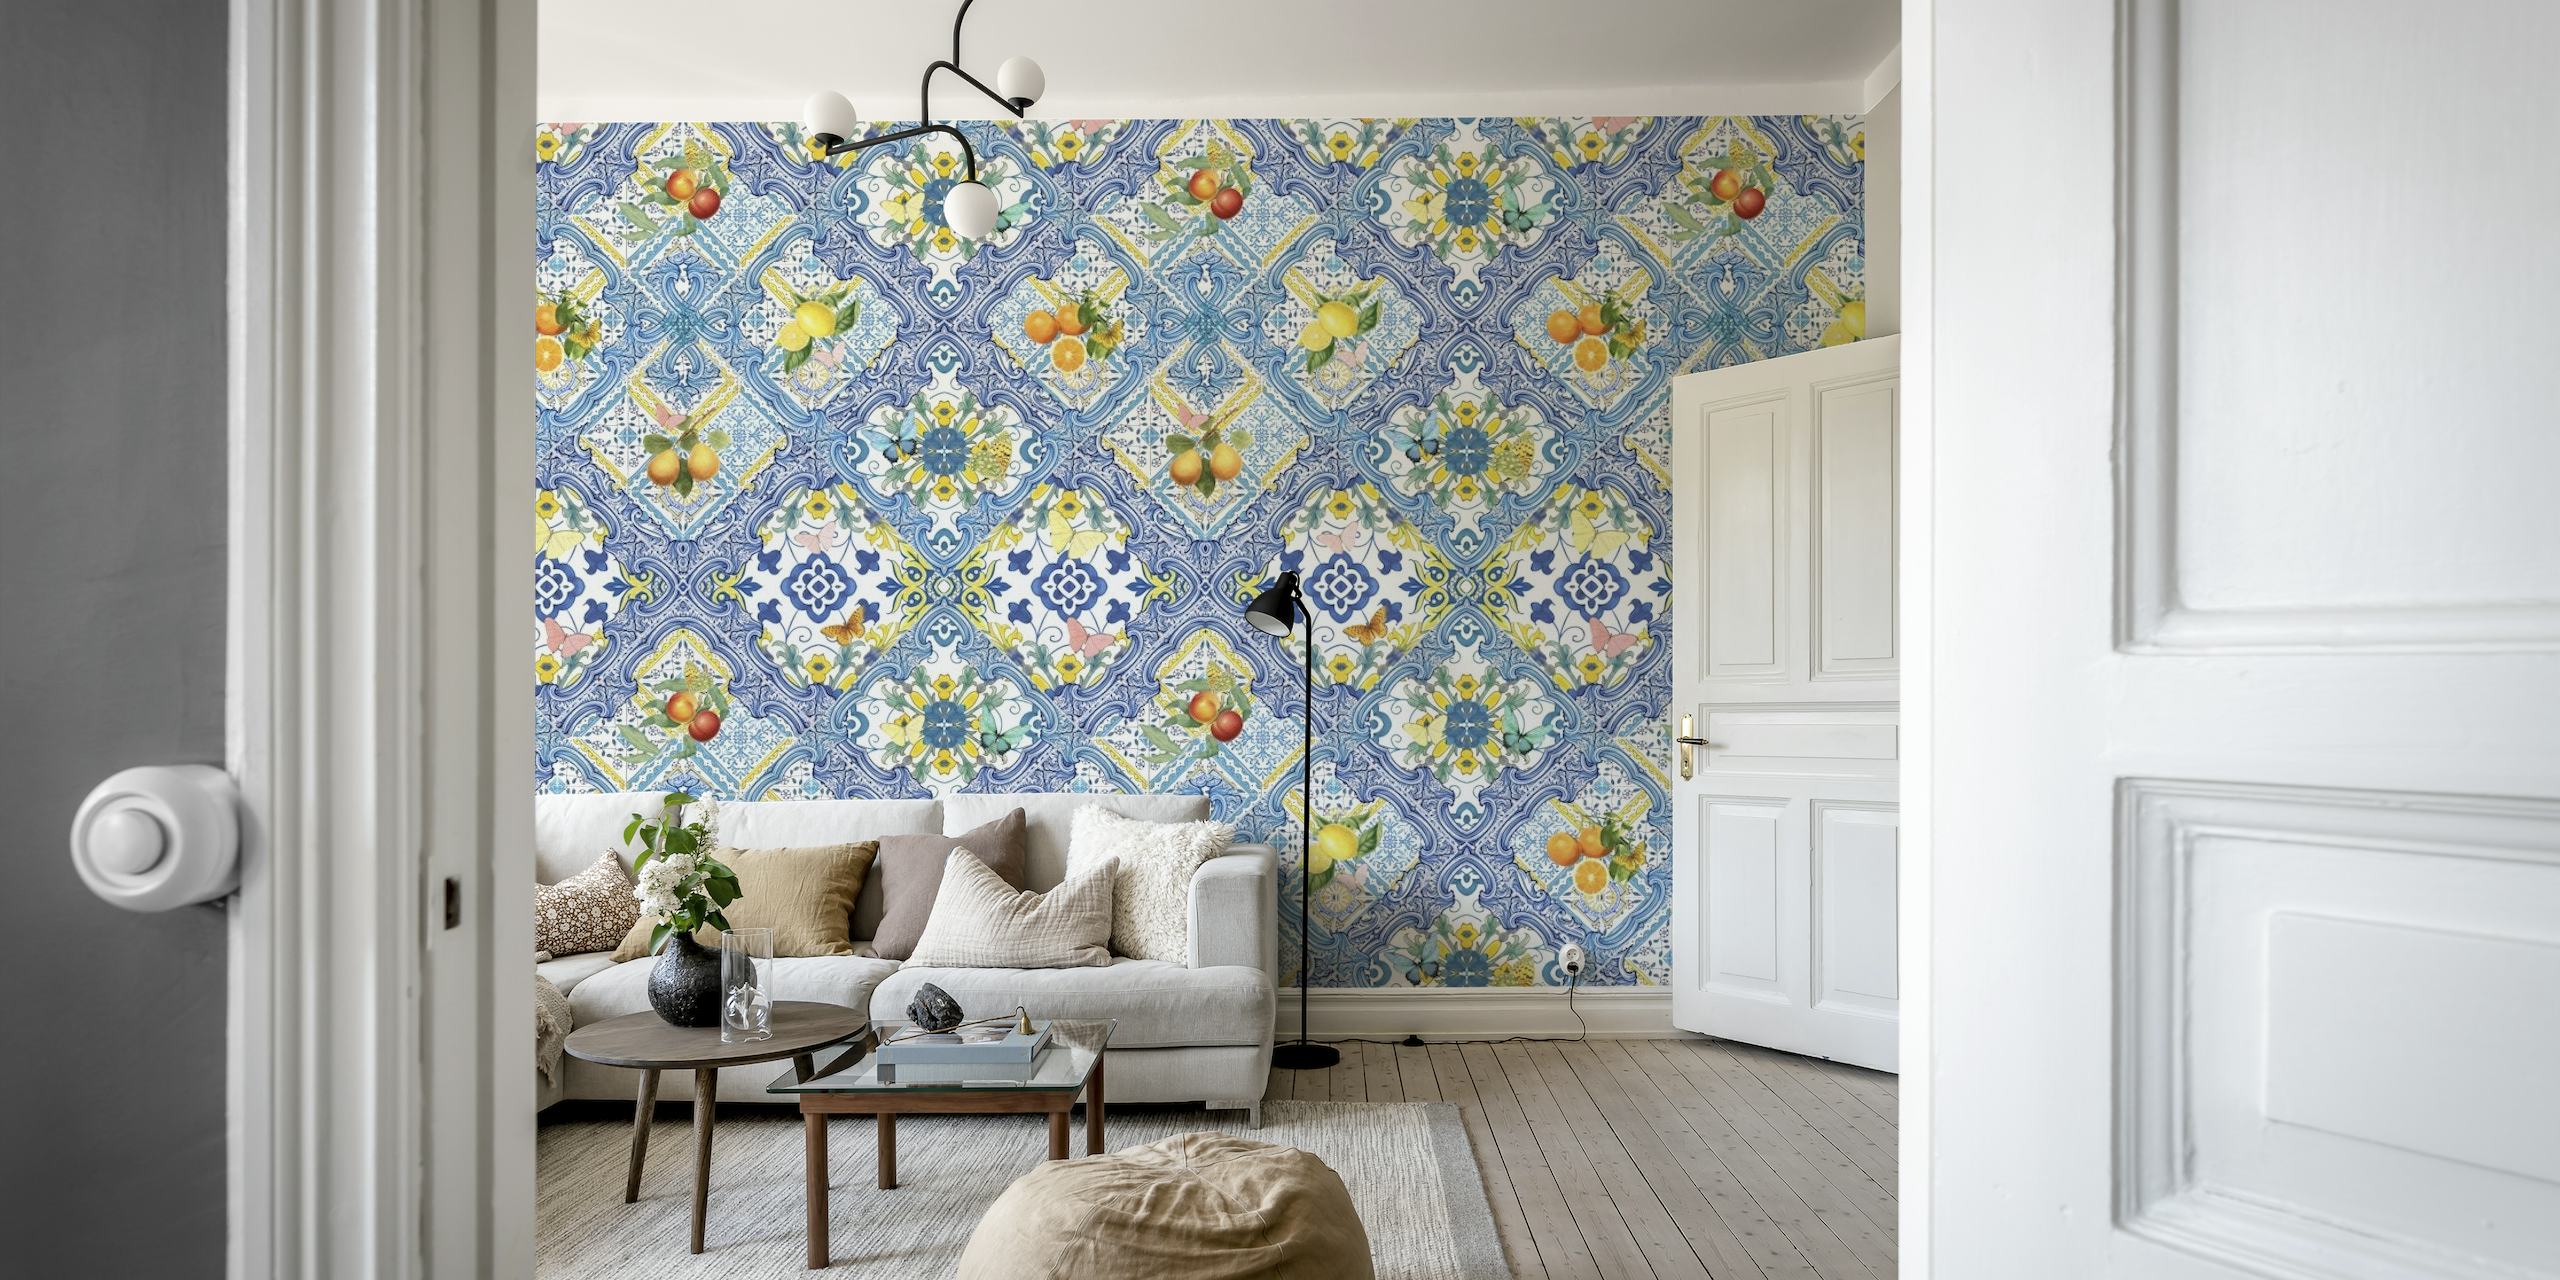 Mediterranean tiles and citrus fruit wallpaper